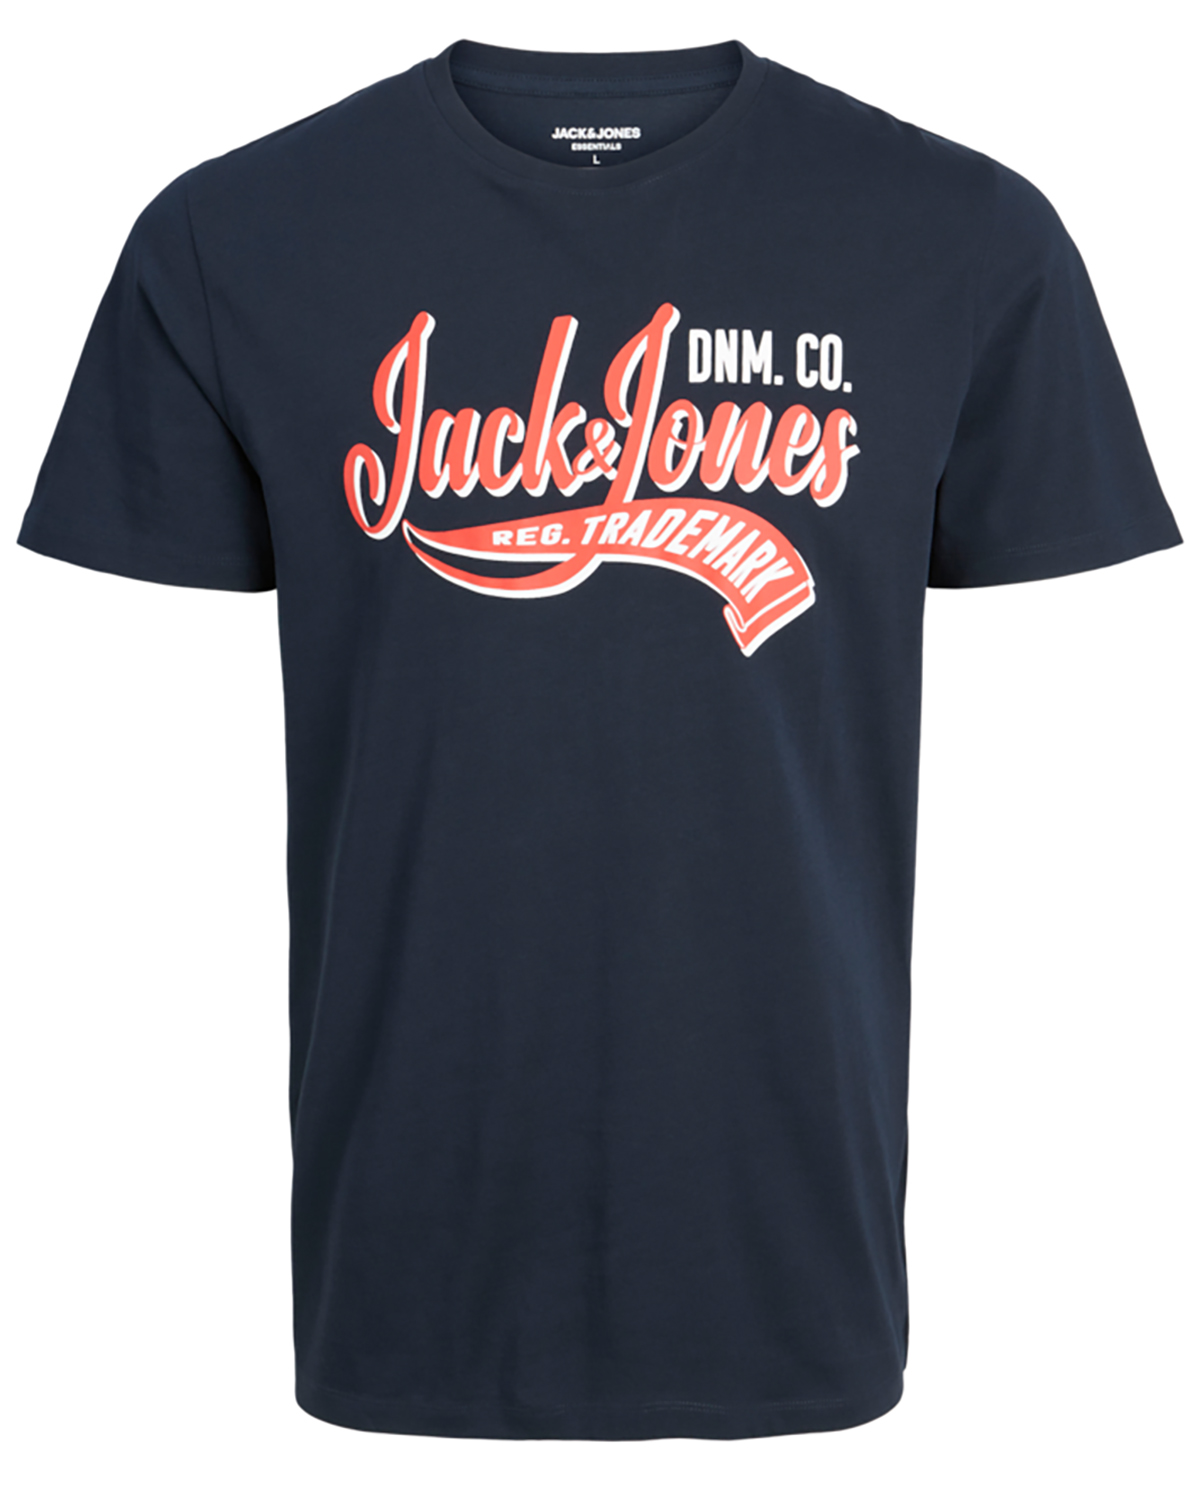 Se Jack & Jones JR t-shirt s/s, Logo tee, navy - 140 - 10år hos Umame.dk